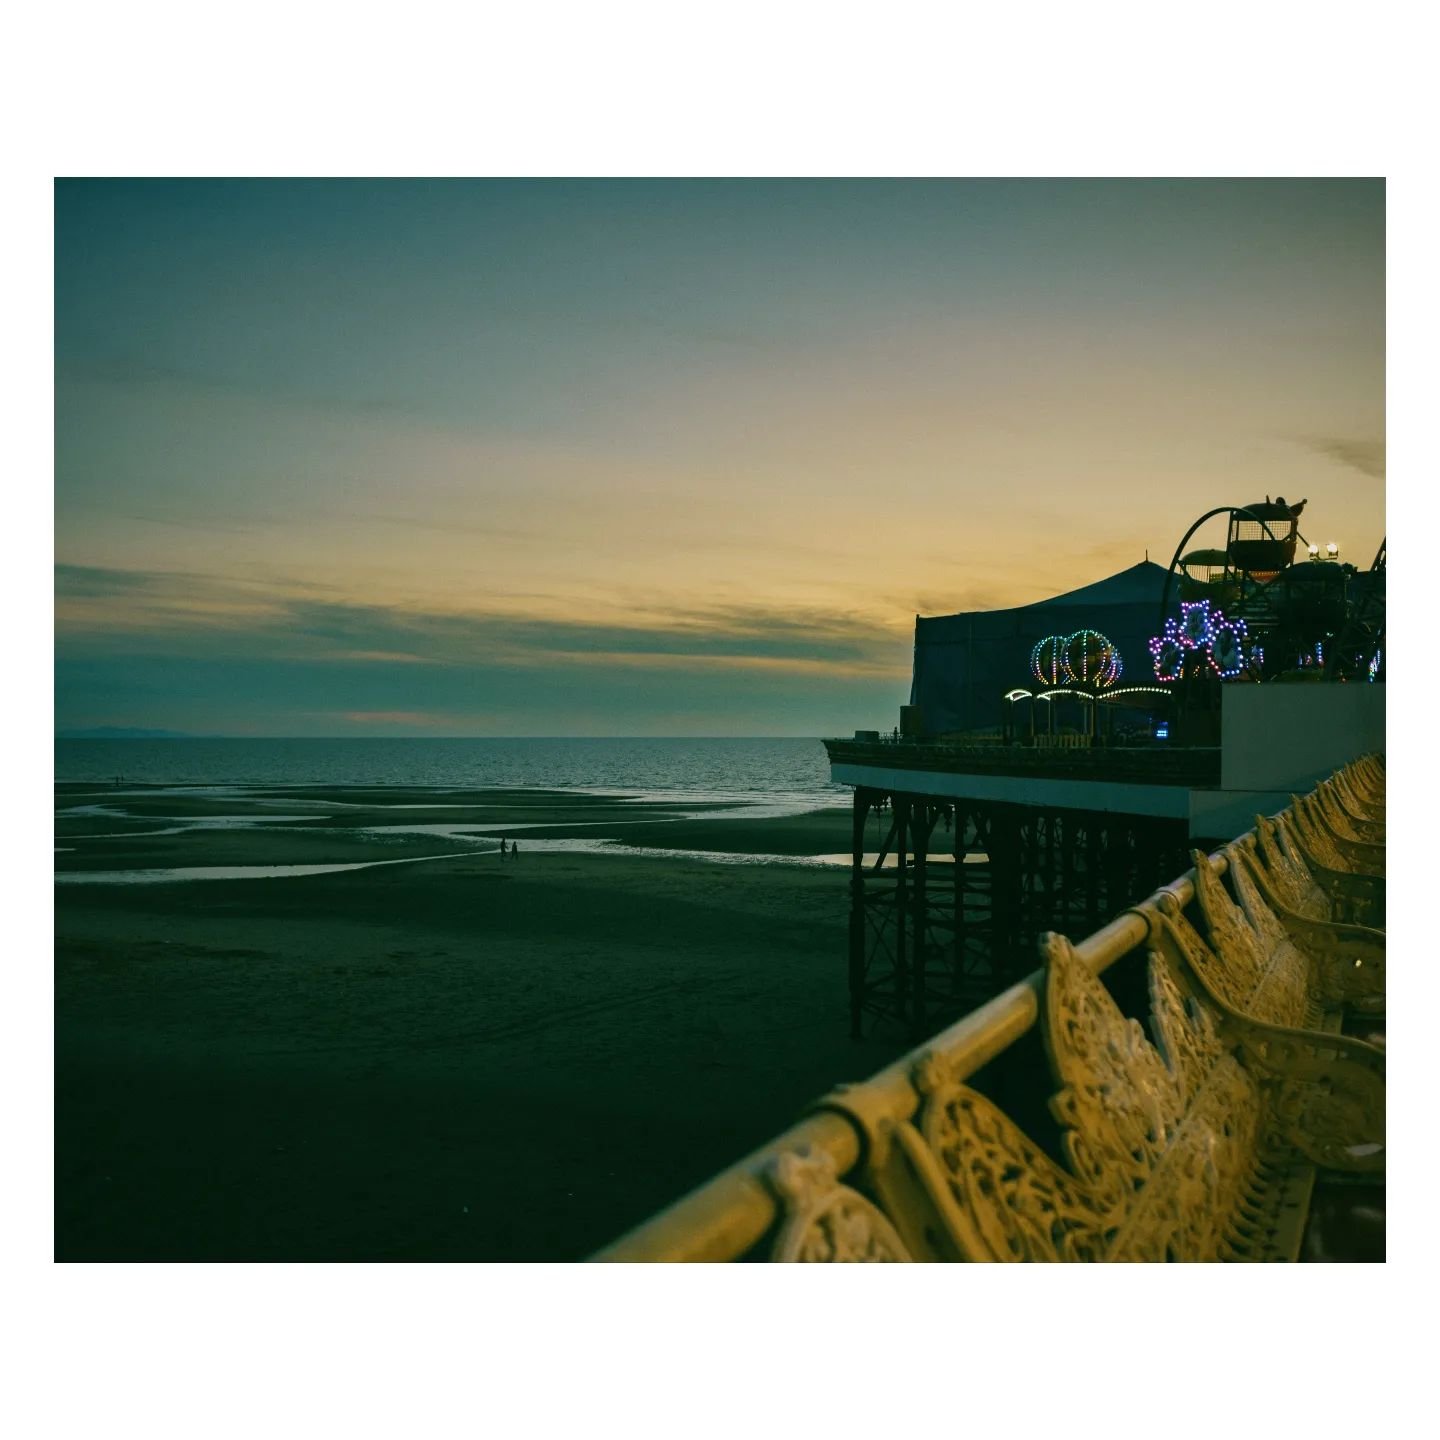 Blackpool...
.
.
.
.
.
.
.
.
.
.
.
.
.
.
.
.
#349amcollection #woofermagazine #documentingbritain #observecollective #reframedmag #makemeseemag #rentalmag #loupemagazine #anotherplacemagazine #alteredlandscape⁠ #ifyouleave #nightmoves #thealteredguid